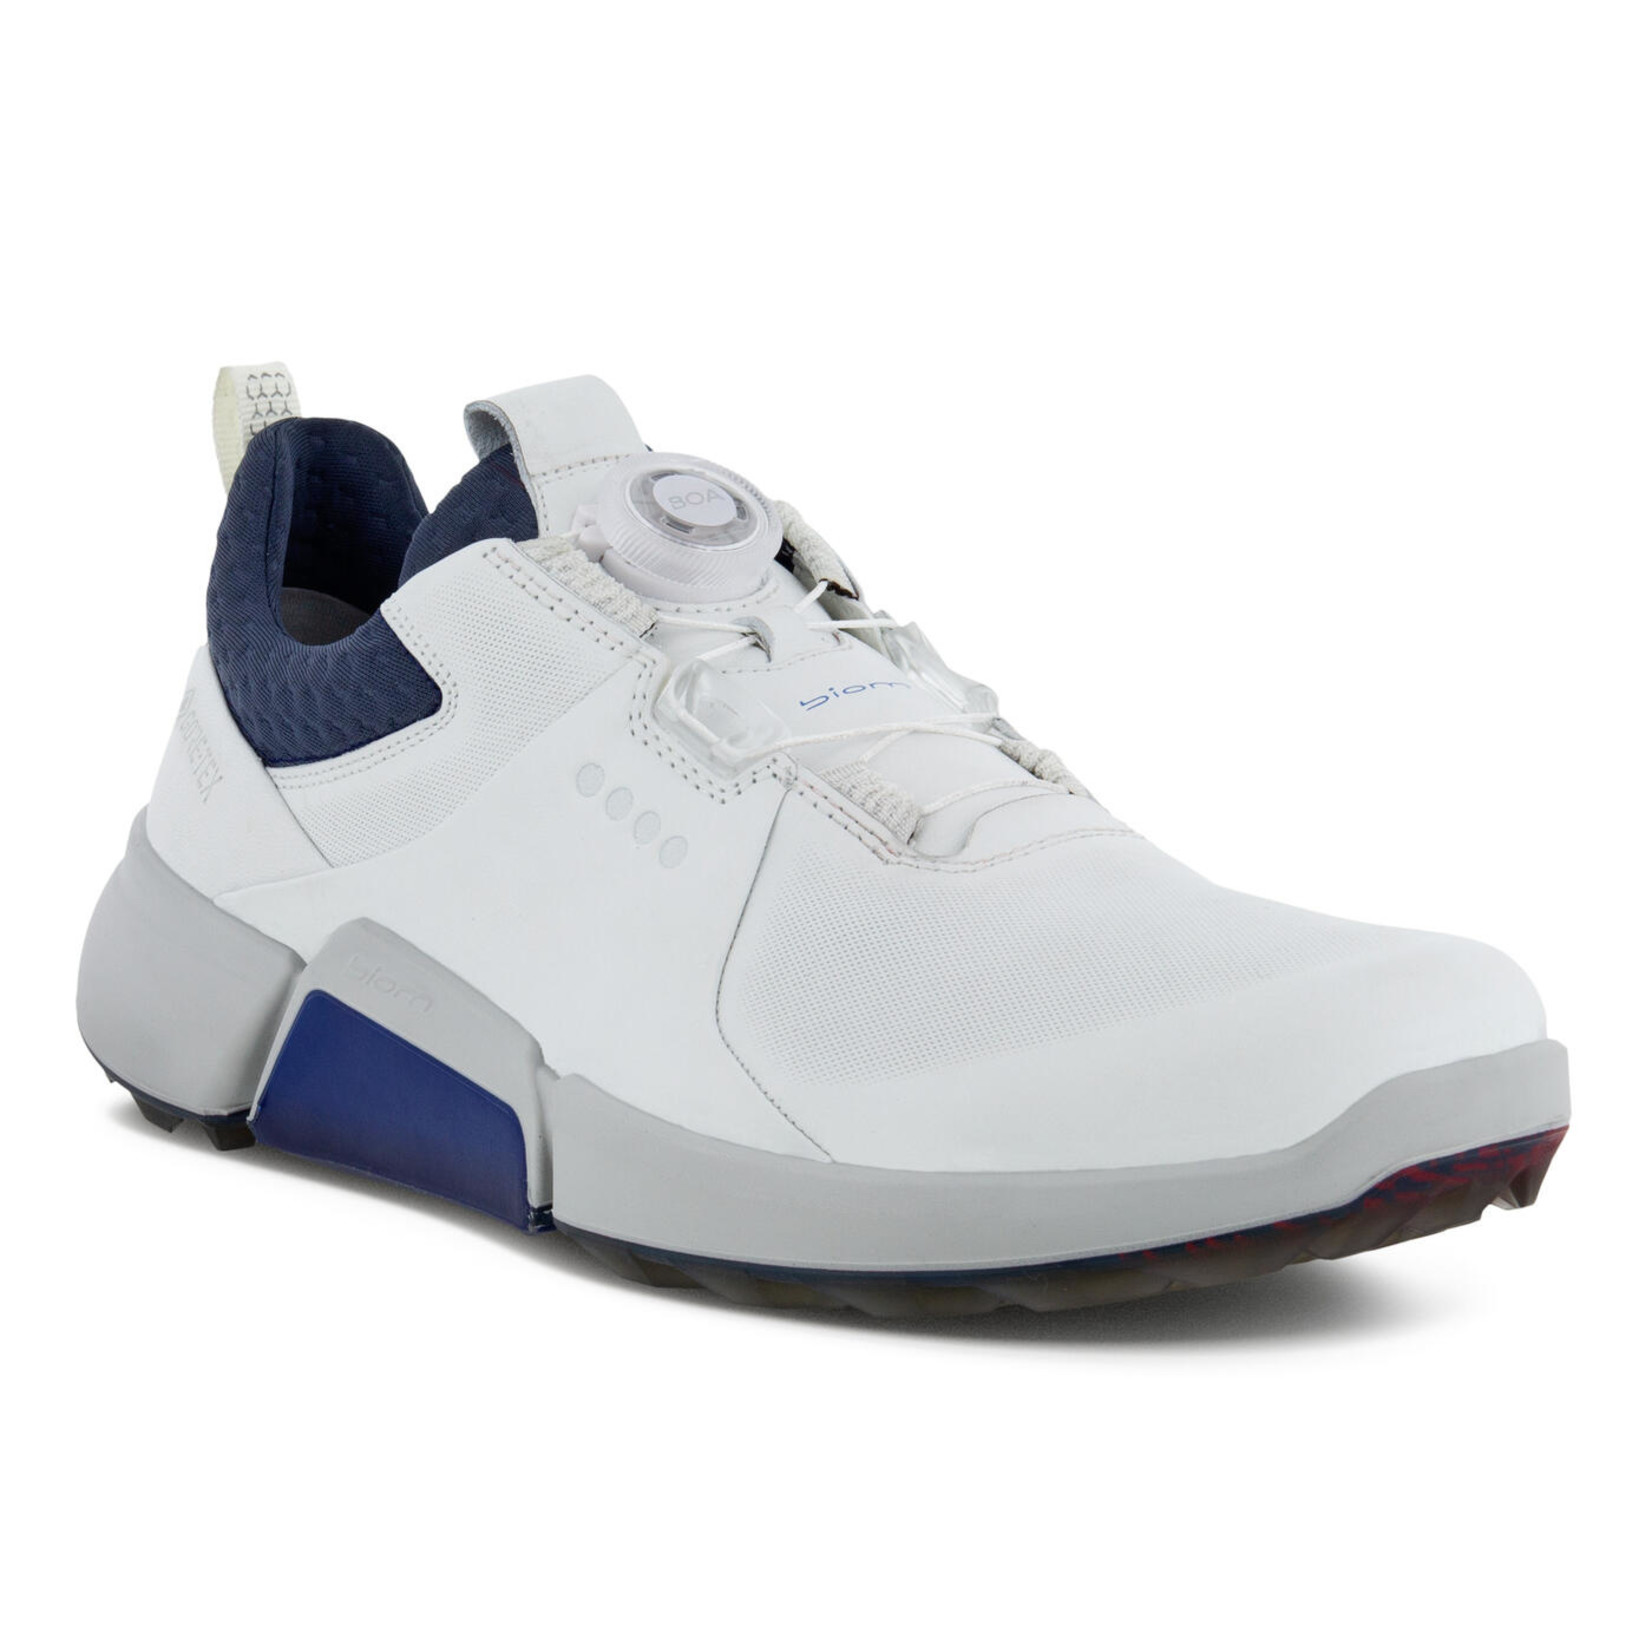 Golf BIOM H4 Men's Golf Shoes - Shippy Shoes